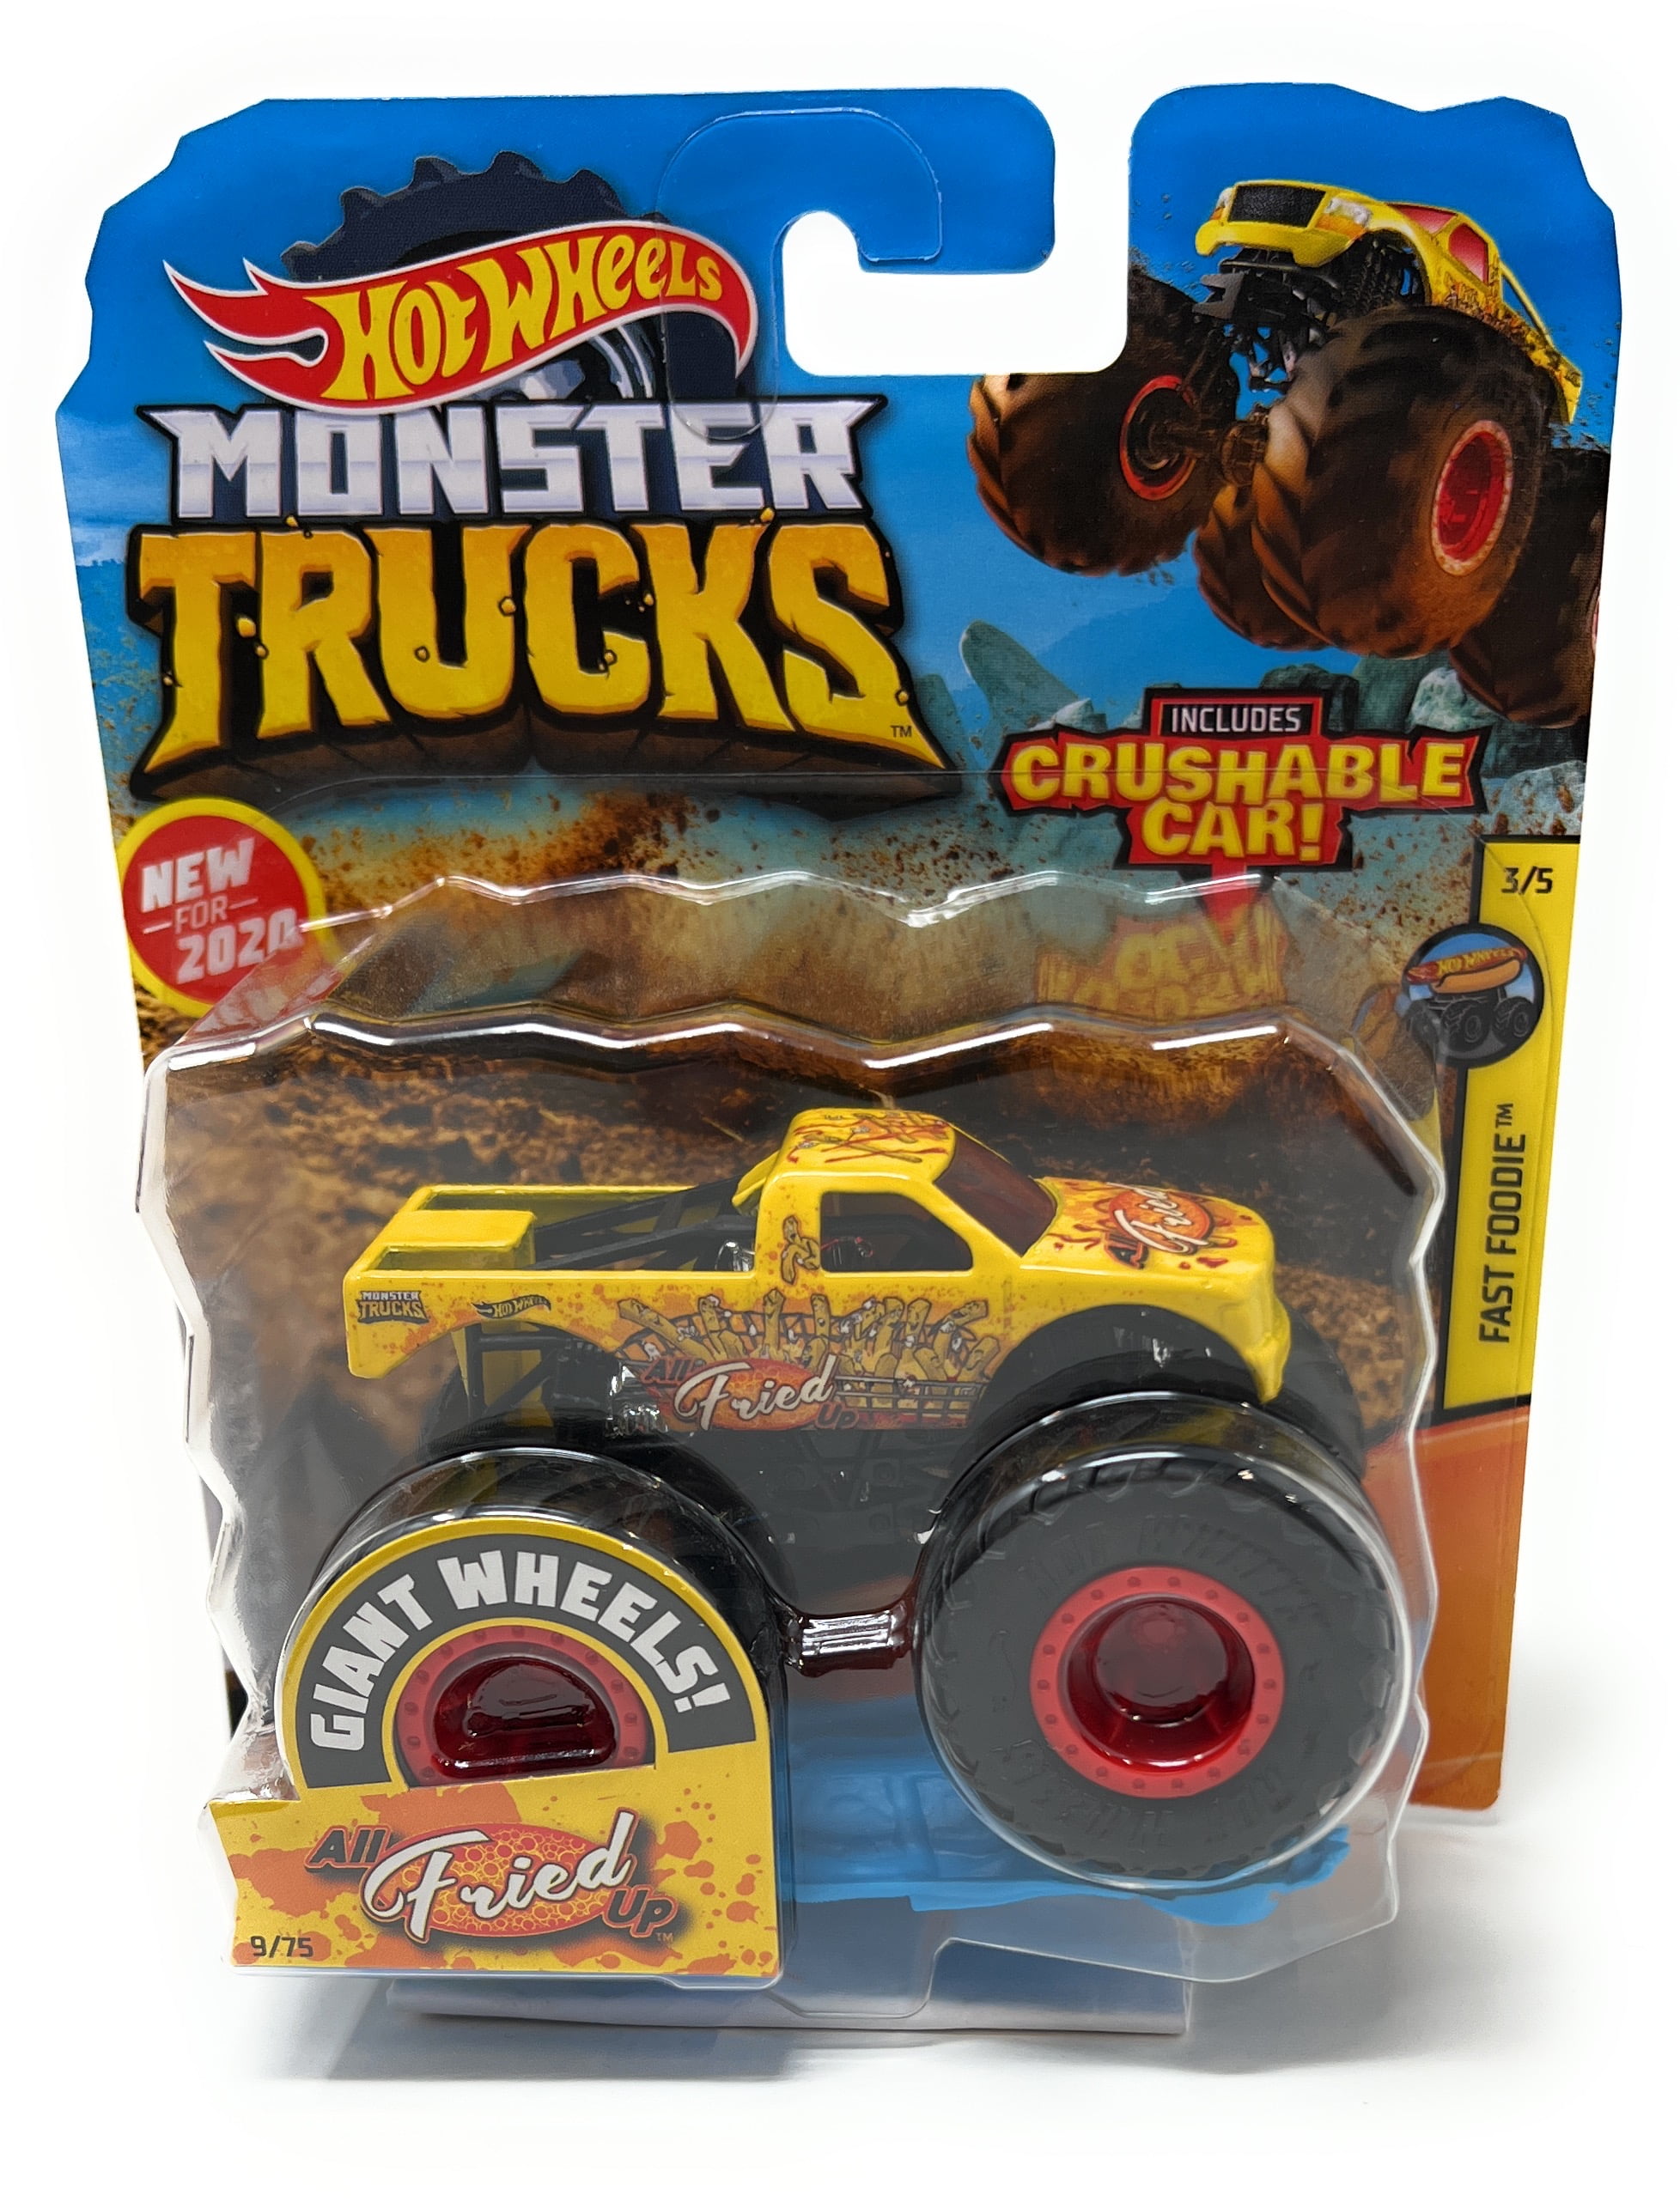 Hot Wheels Monster Trucks 1: 64, 4 Pack Wild Ragers, 1 - Foods Co.